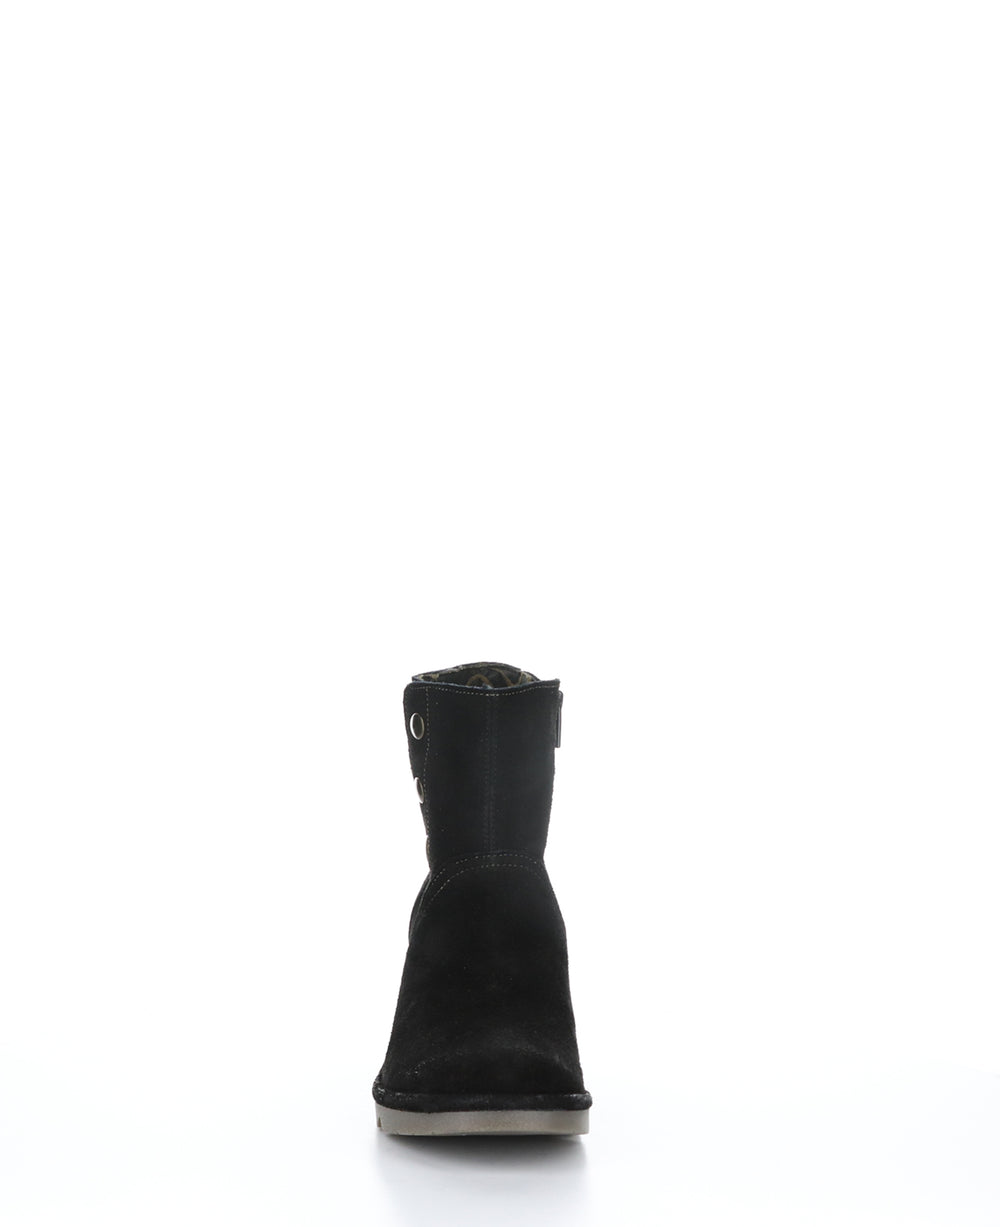 NERY336FLY Black Zip Up Ankle Boots|NERY336FLY Bottines avec Fermeture Zippée in Noir